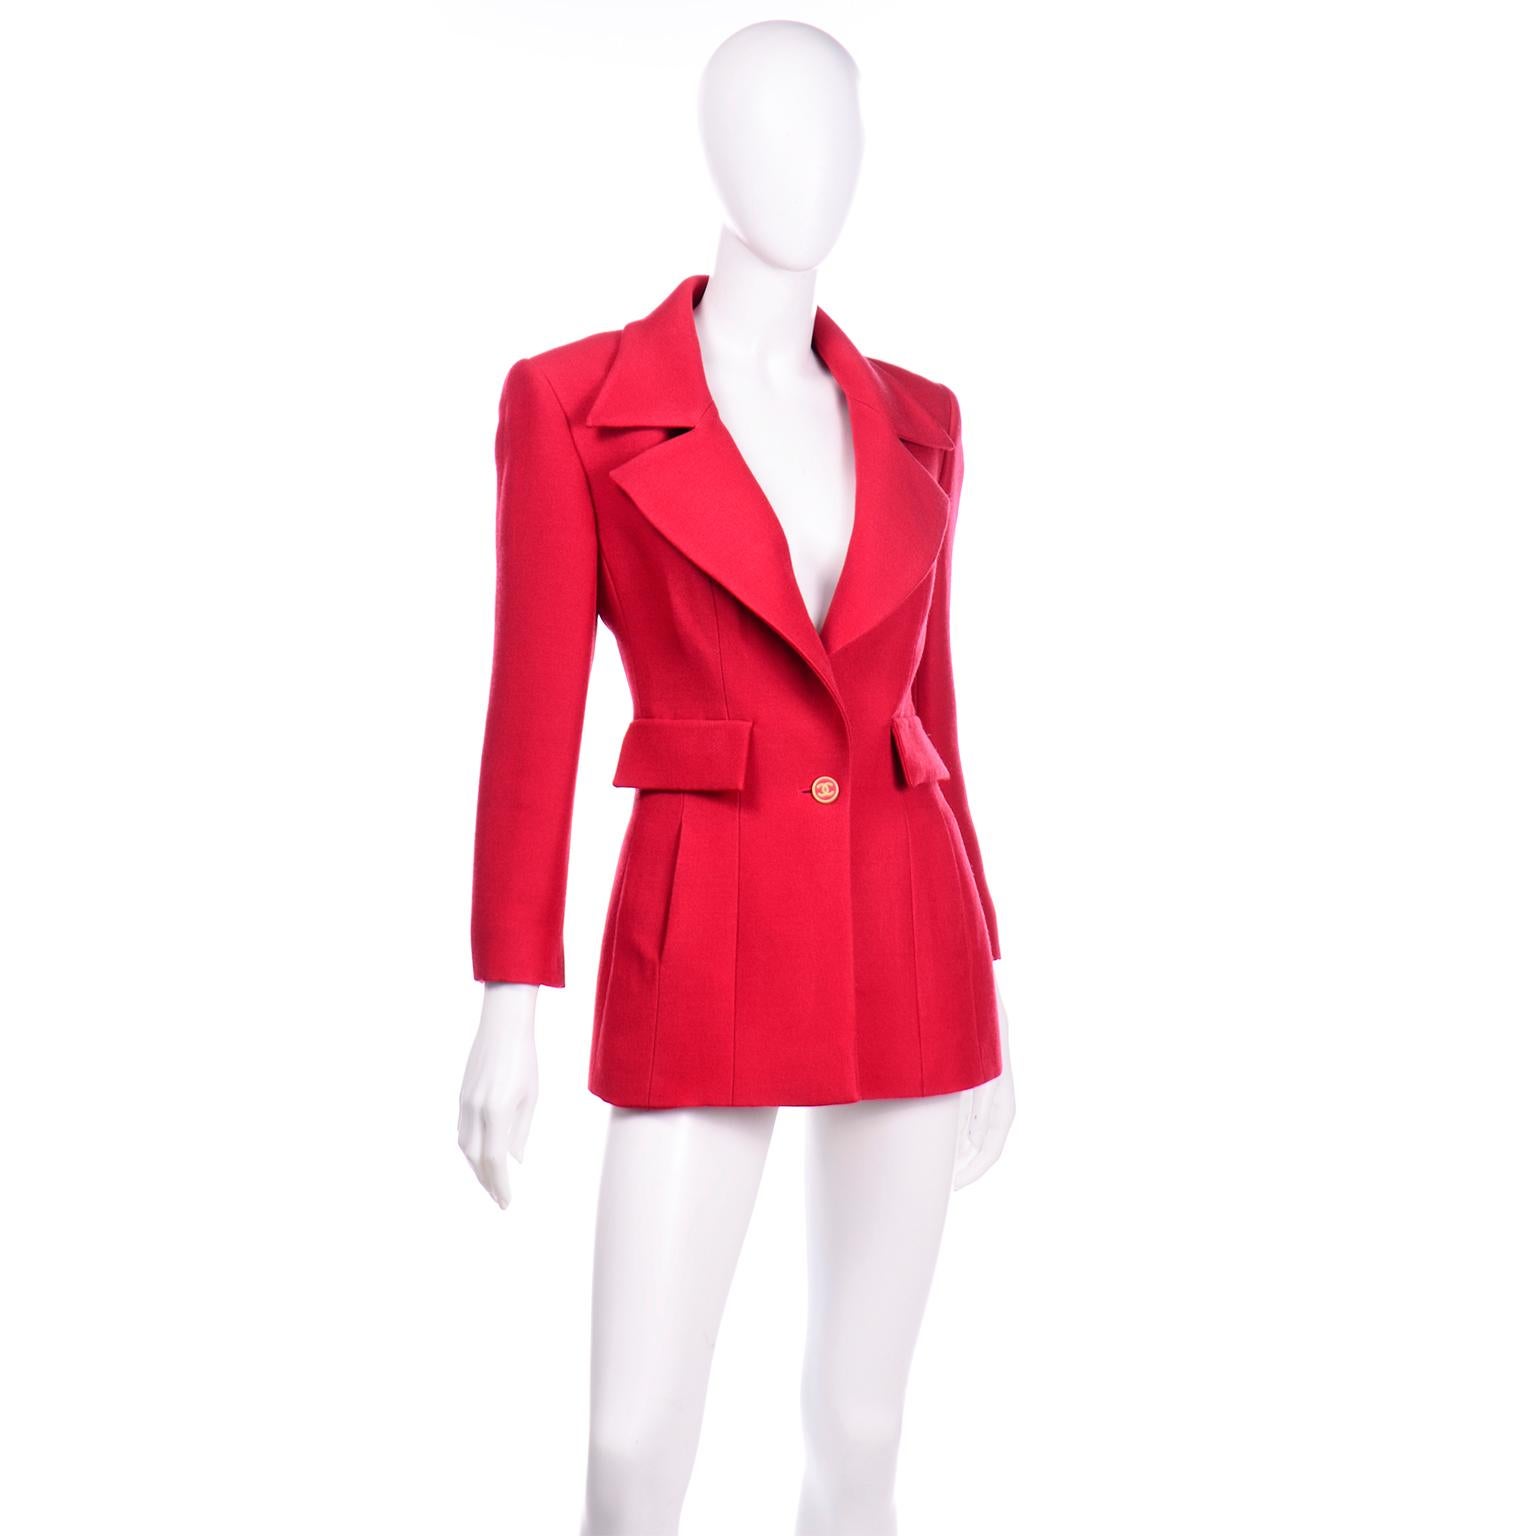 Women's 2001 Red Wool Blend Chanel Blazer Jacket W Notch Collar and CC Button Closure